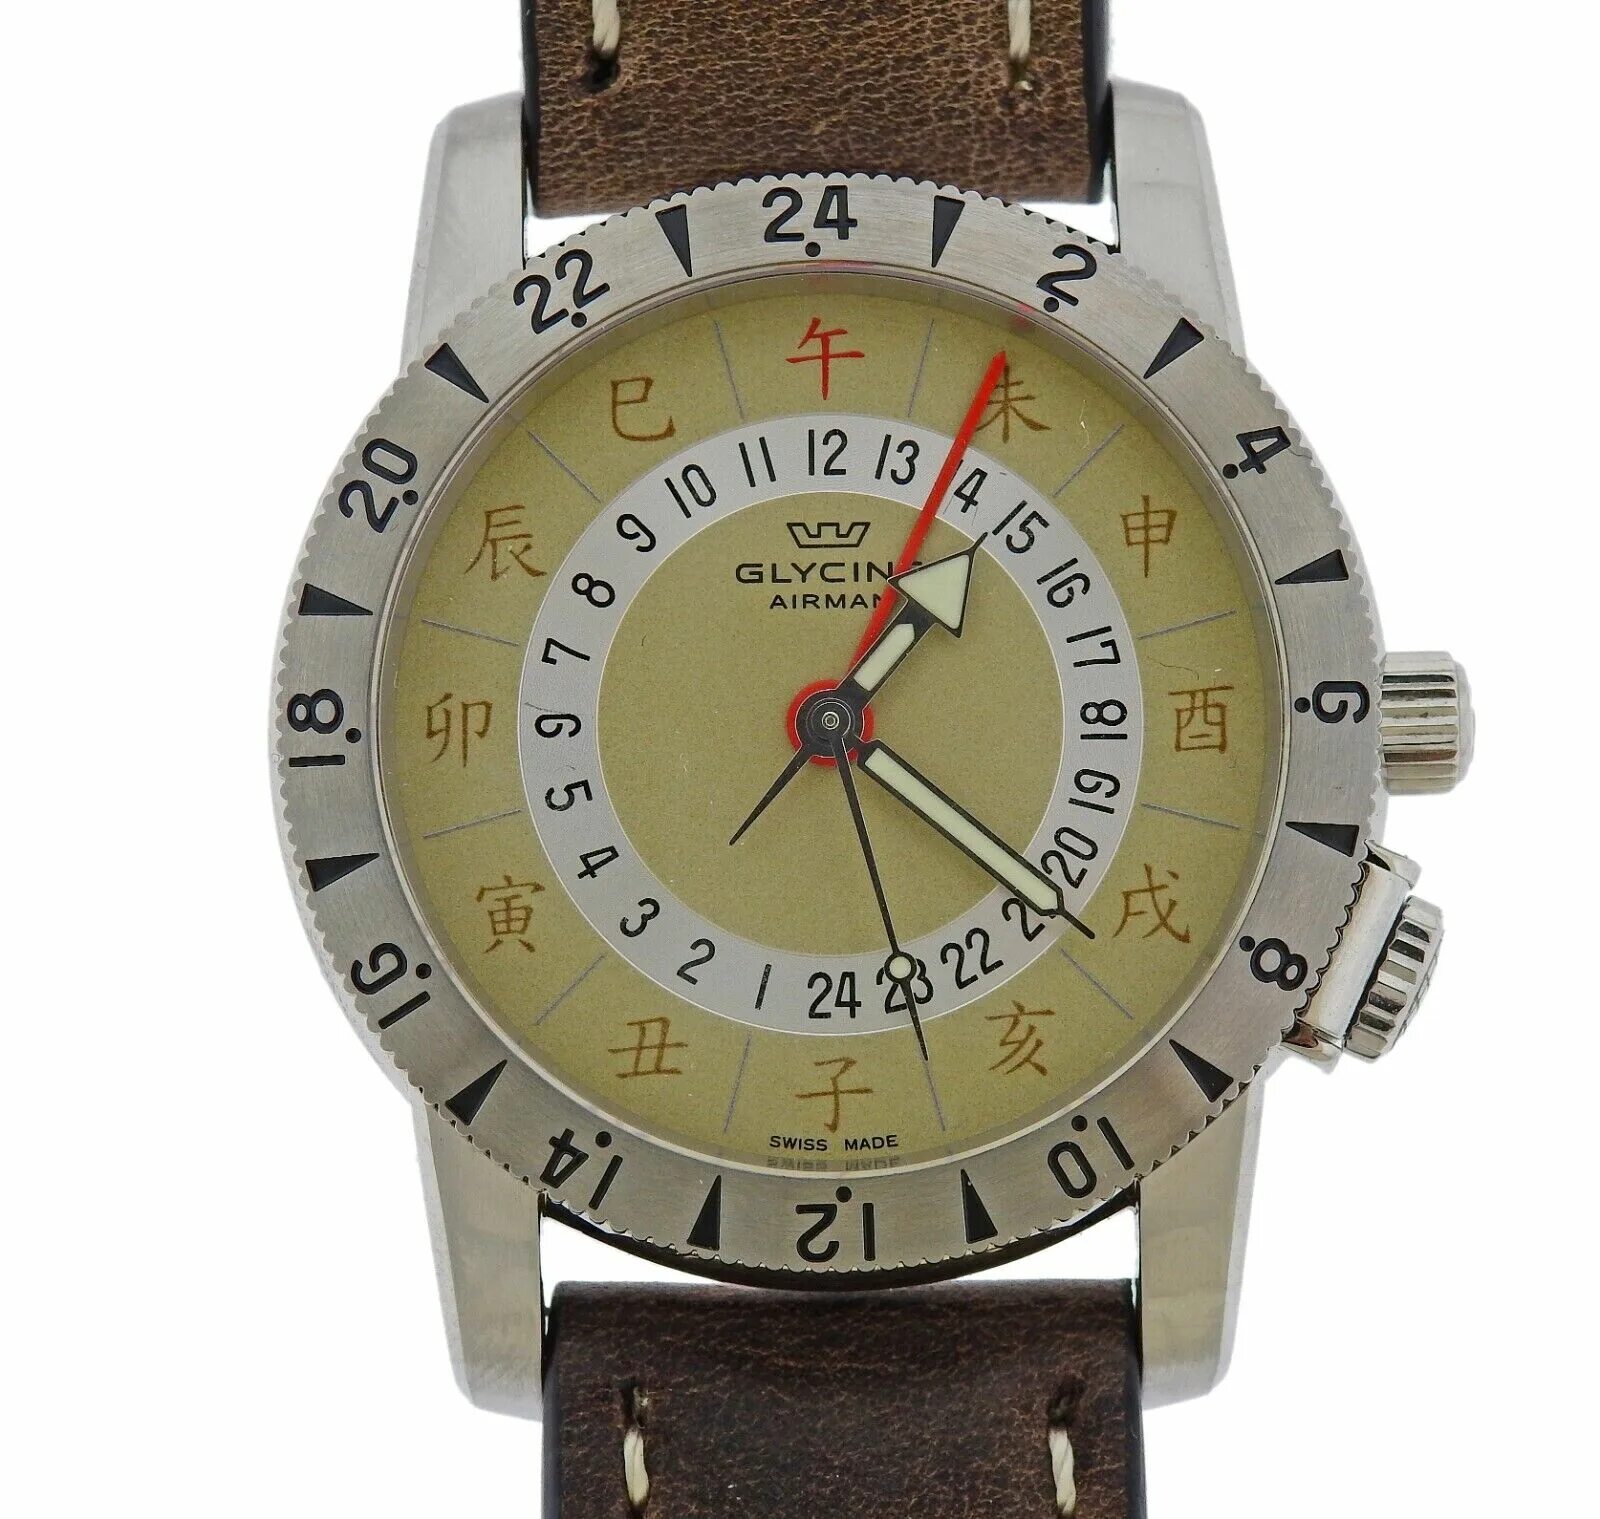 22 limited. Glycine Airman GMT. Glycine (марка часов). Glycine Airman купить. Часы Glycine купить.